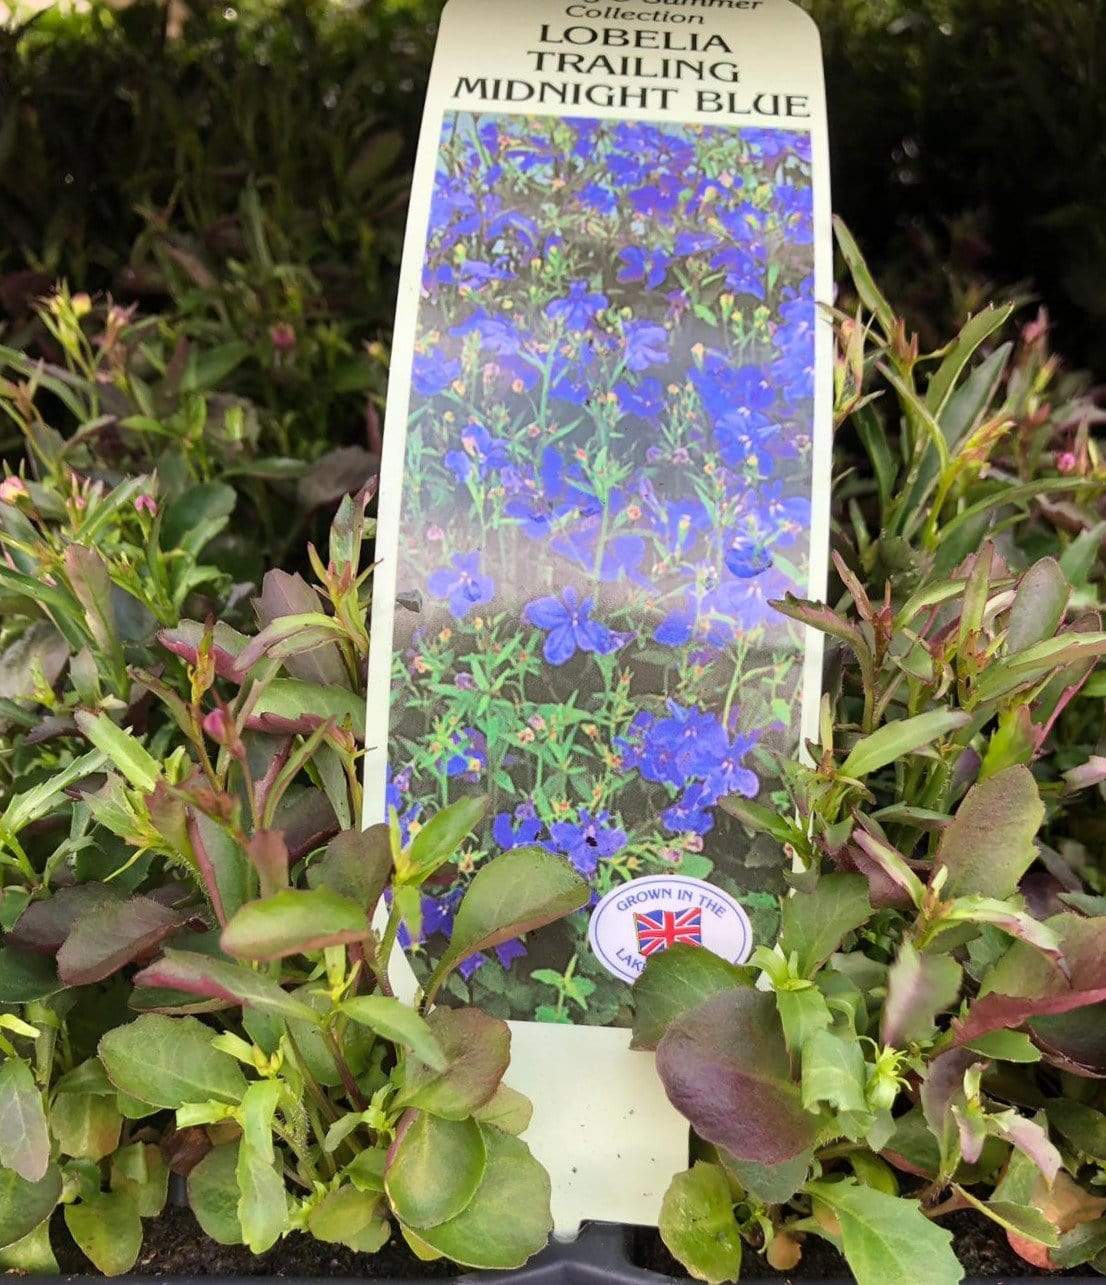 Trowell Garden Centre Garden Bedding Plants Strips Bedding Plant Lobelia Trailing Midnight Blue 20 pack Strip